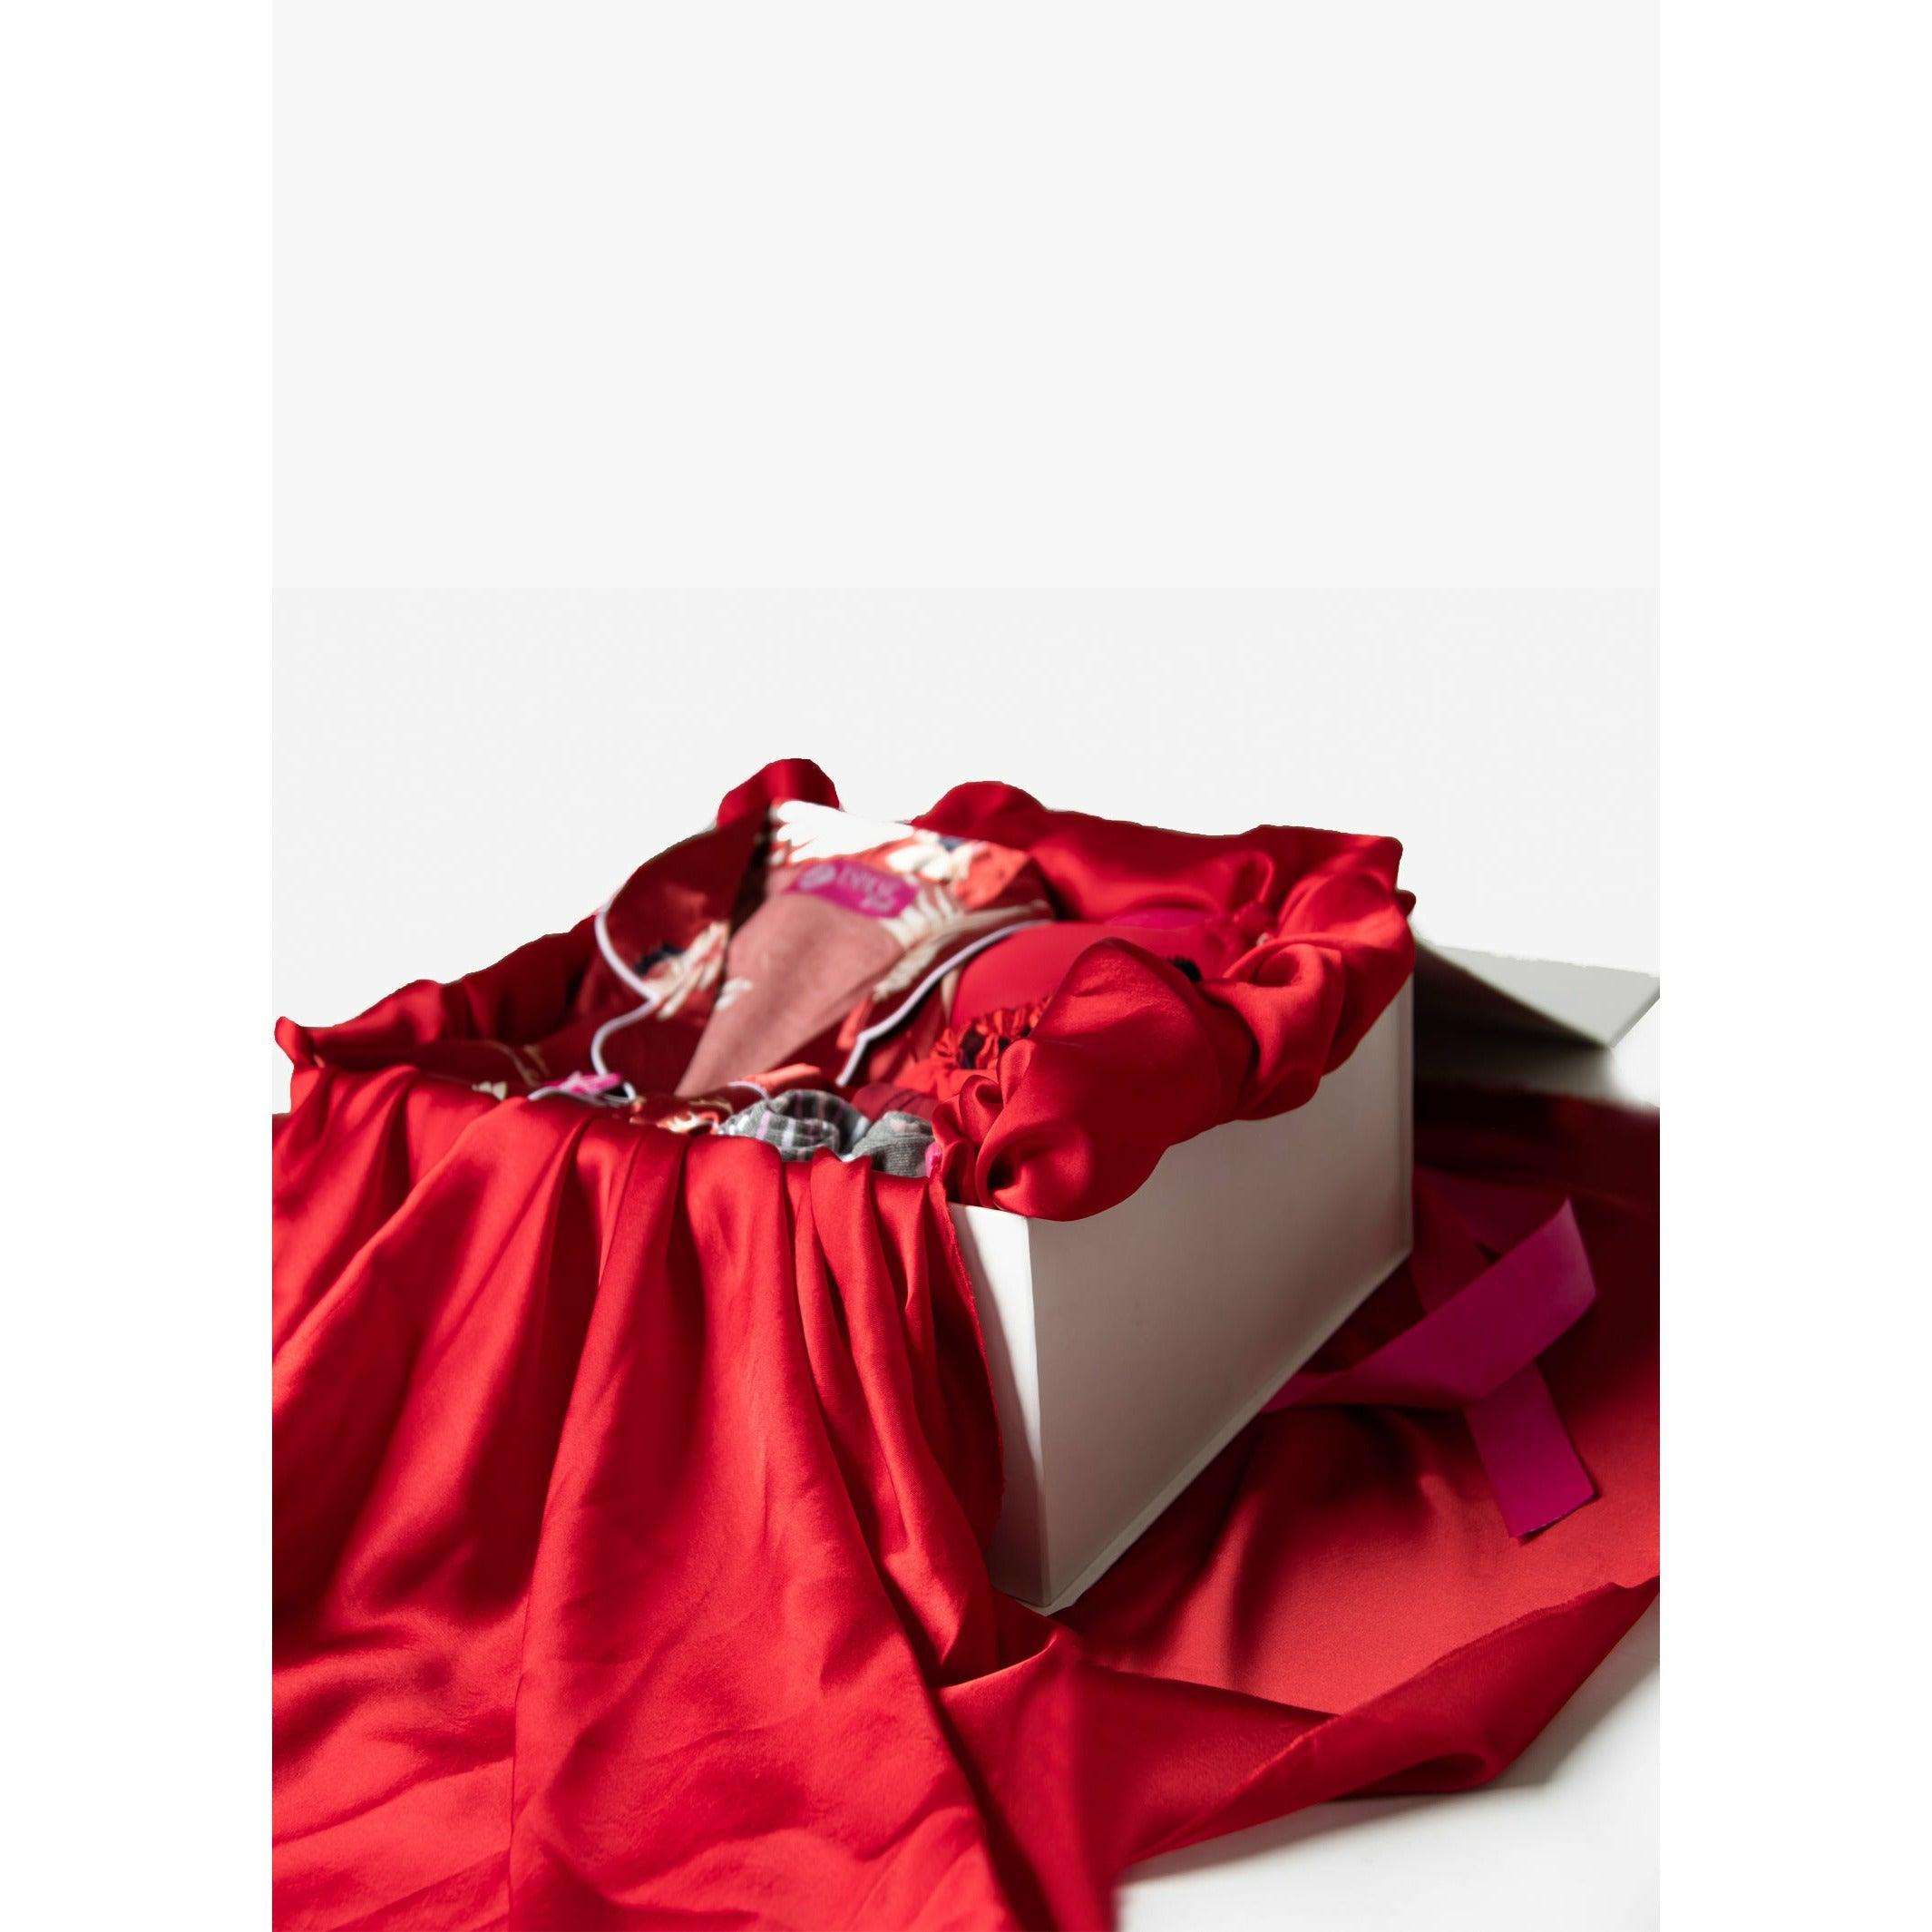 Espico Pink Elegant 8 pcs. Wedding Gift Box - Espicopink